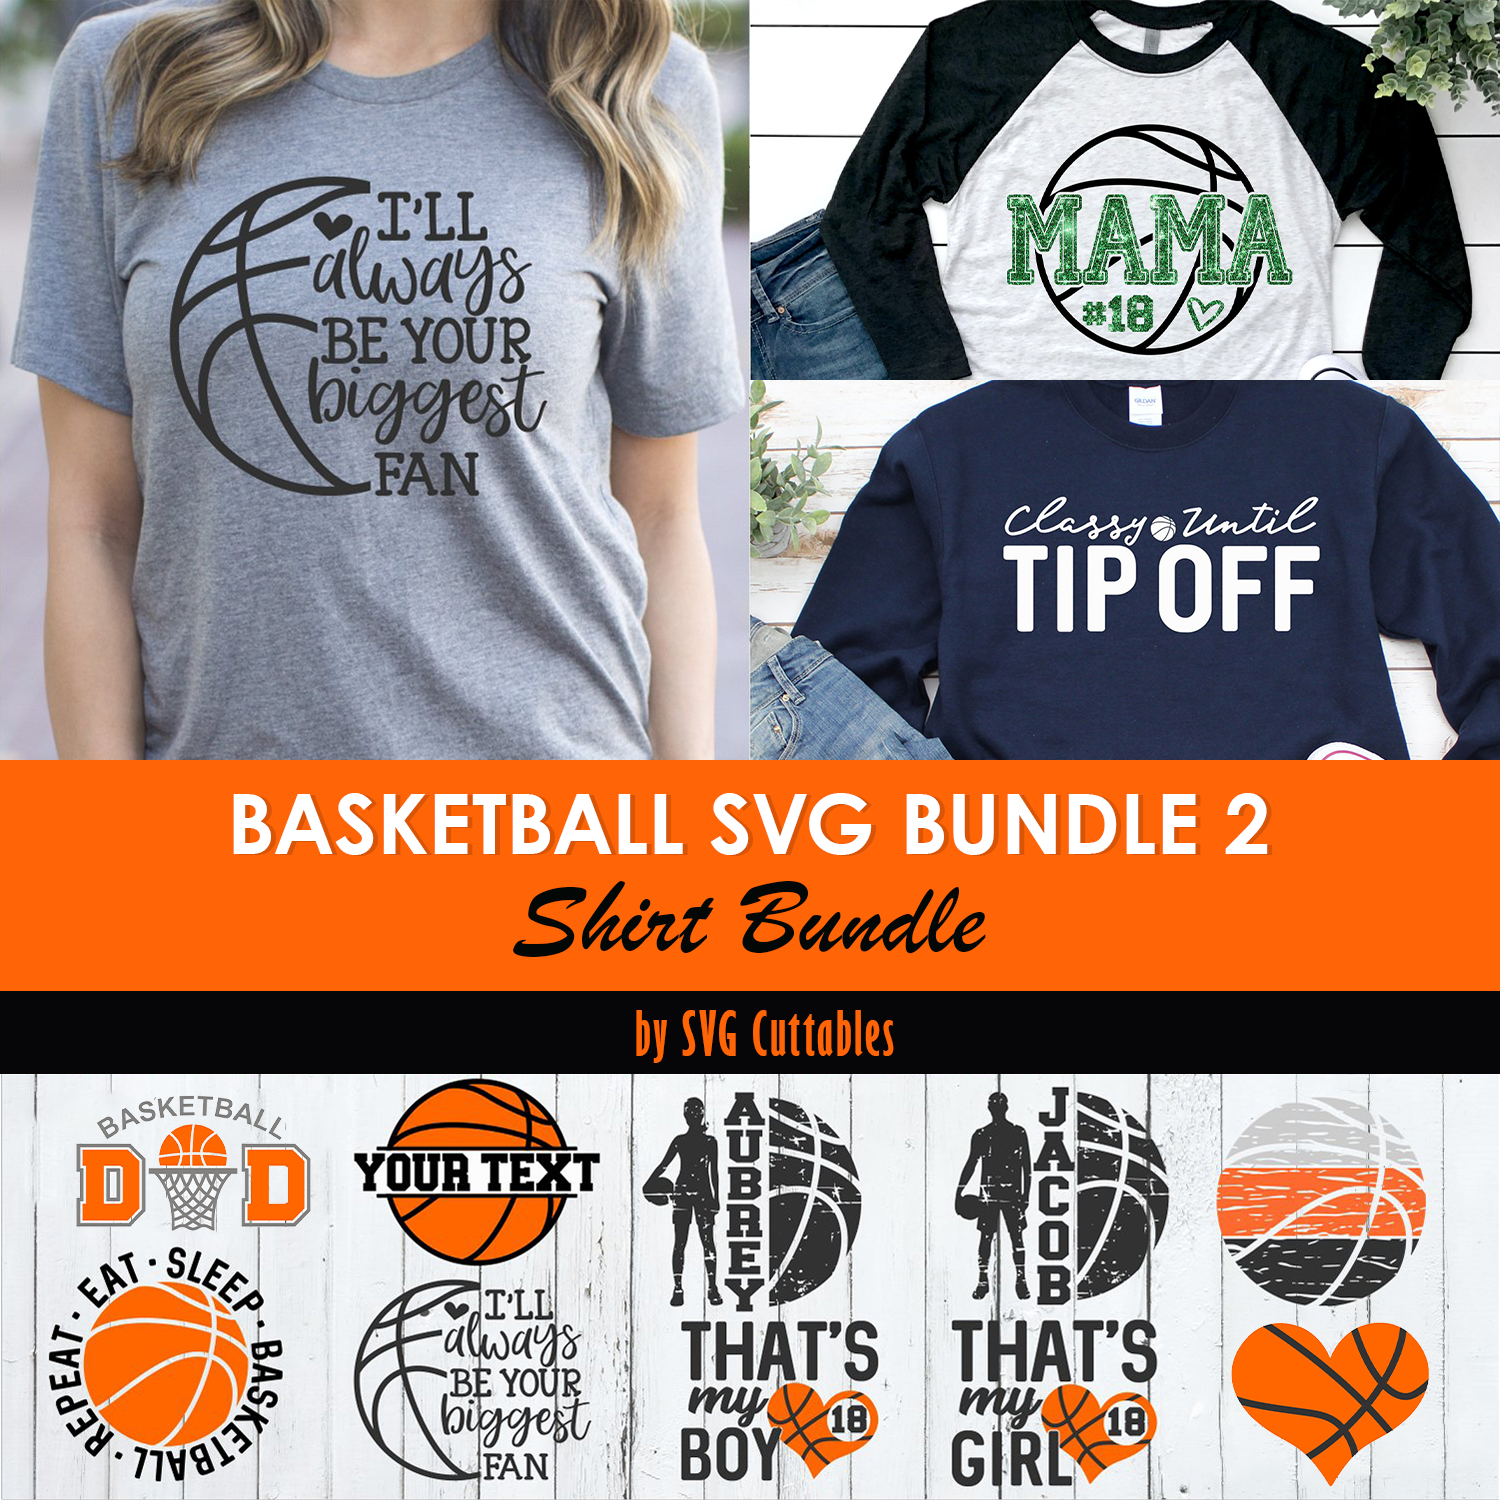 Preview basketball svg bundle 2 shirt bundle.